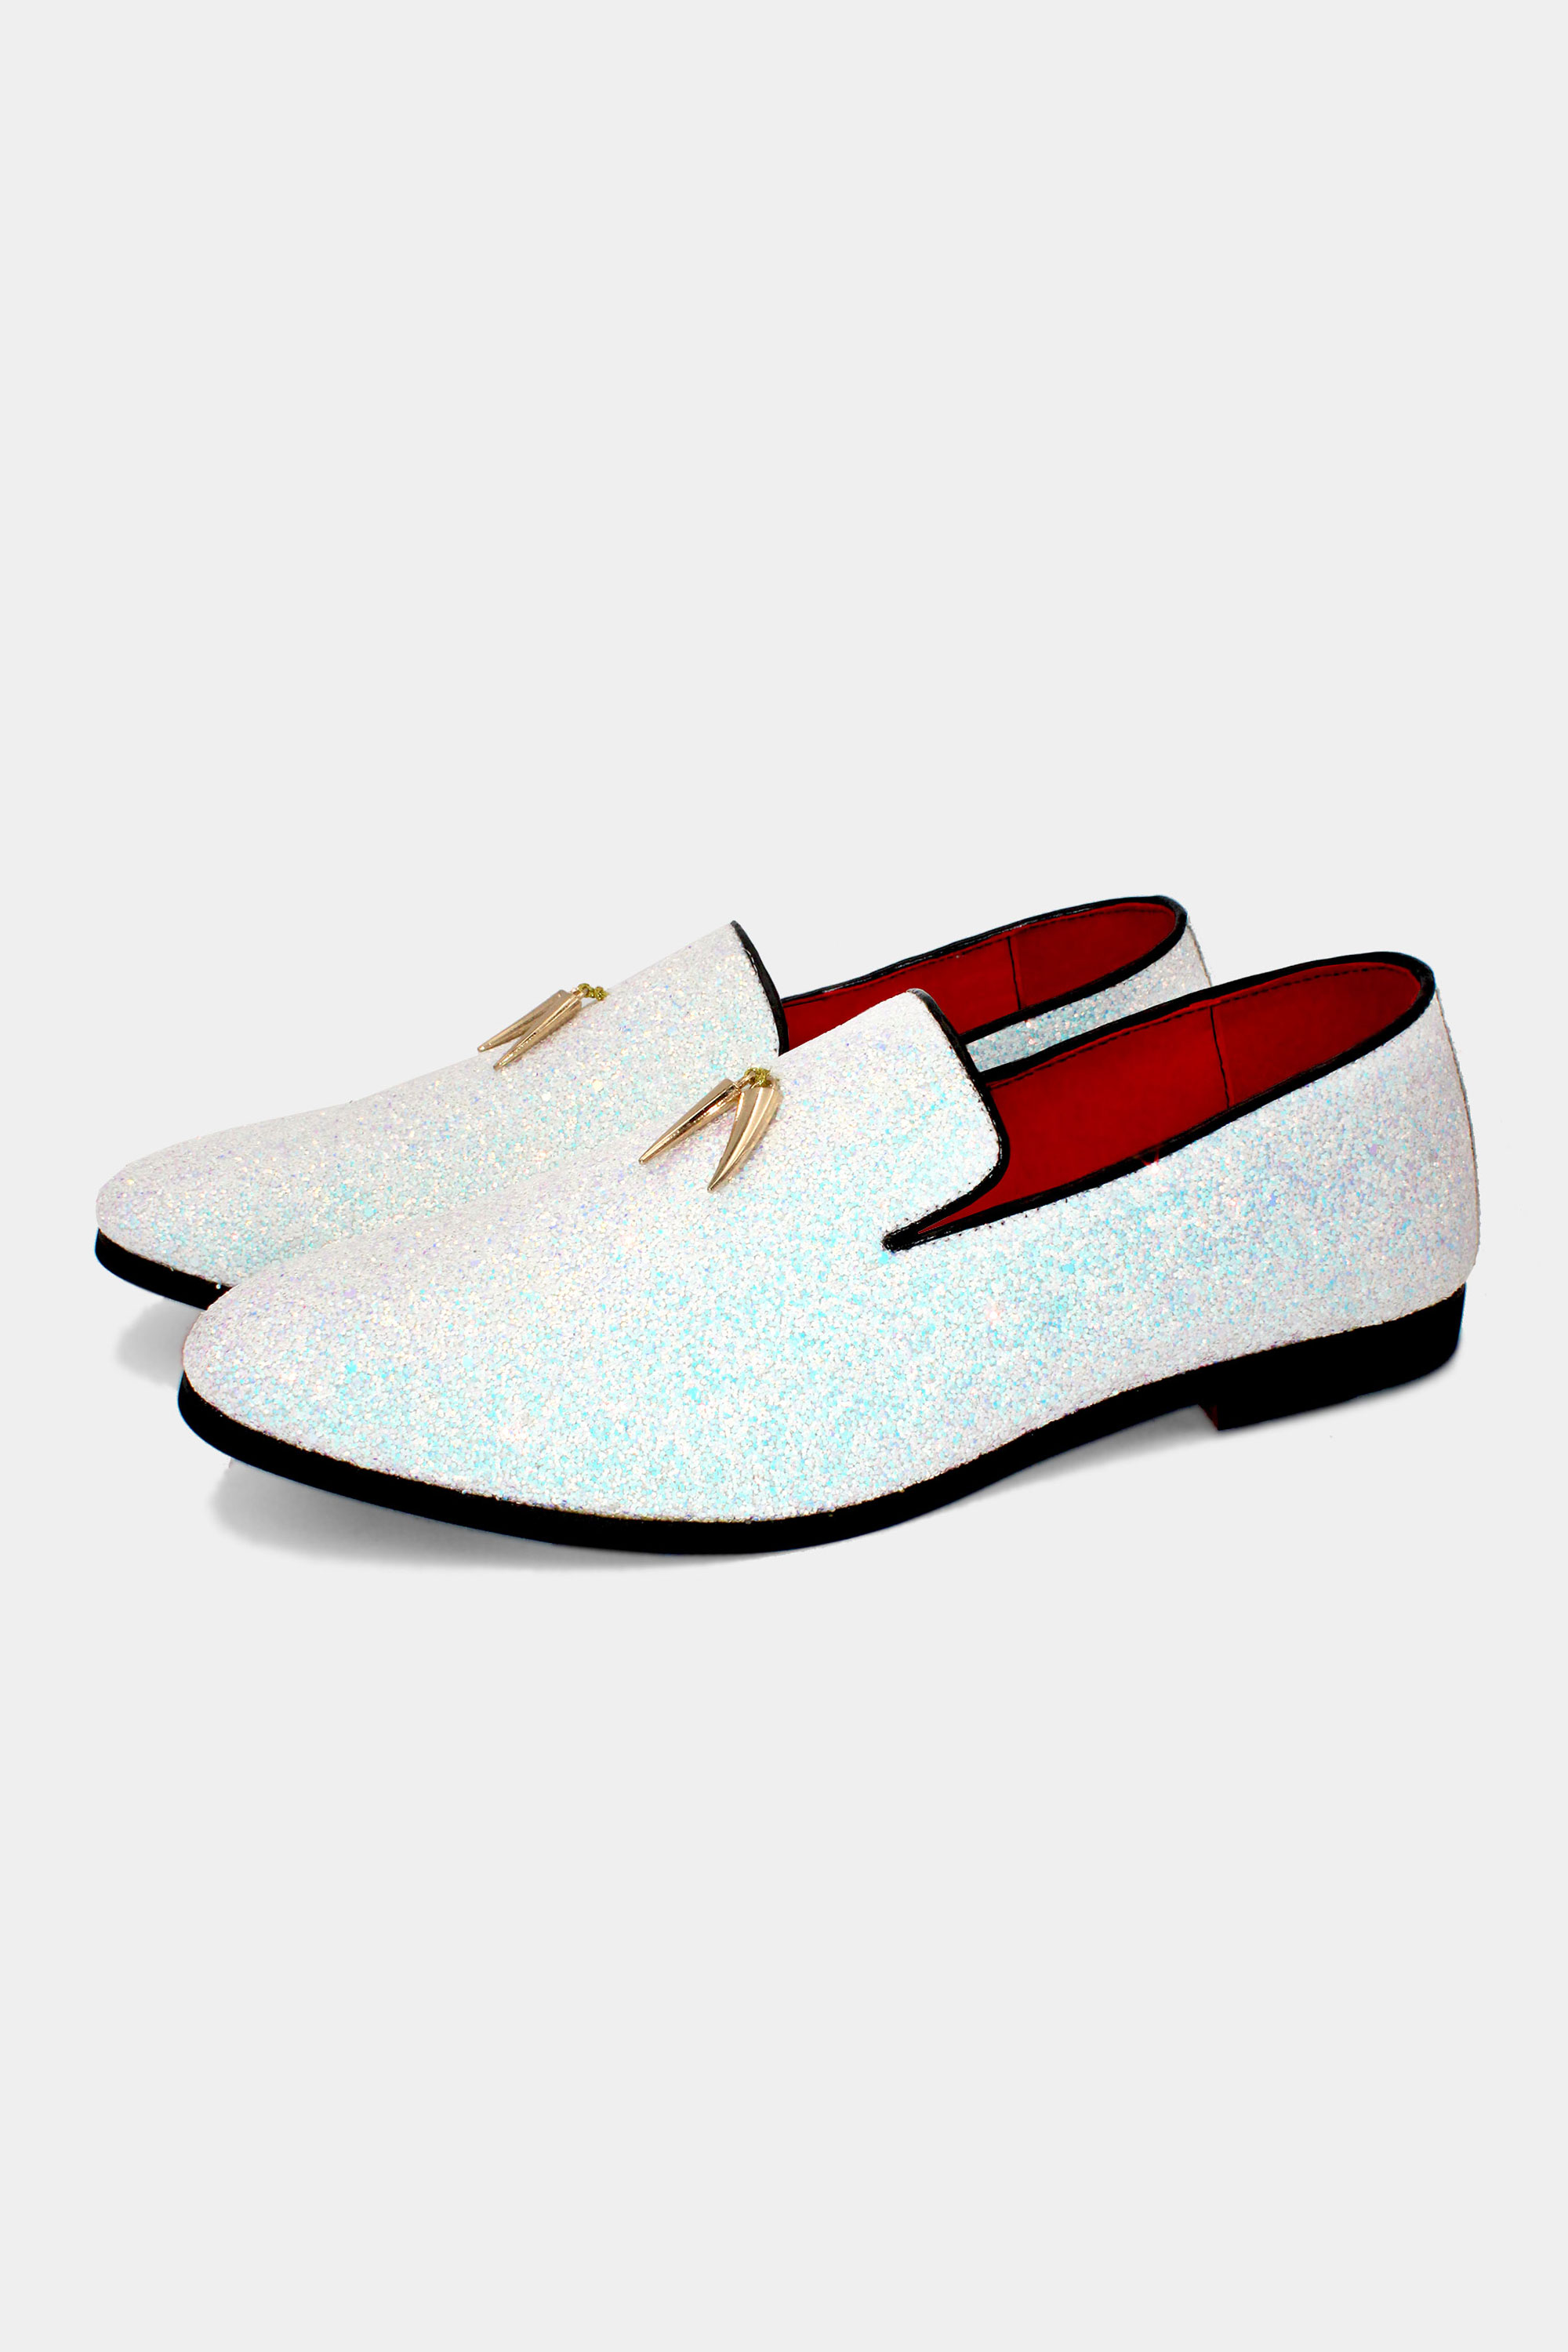 Mens-White-Glitter-Loafers-Shoes-Groom-Wedding-Shoes-for-Men-from-Gentlemansguru.com